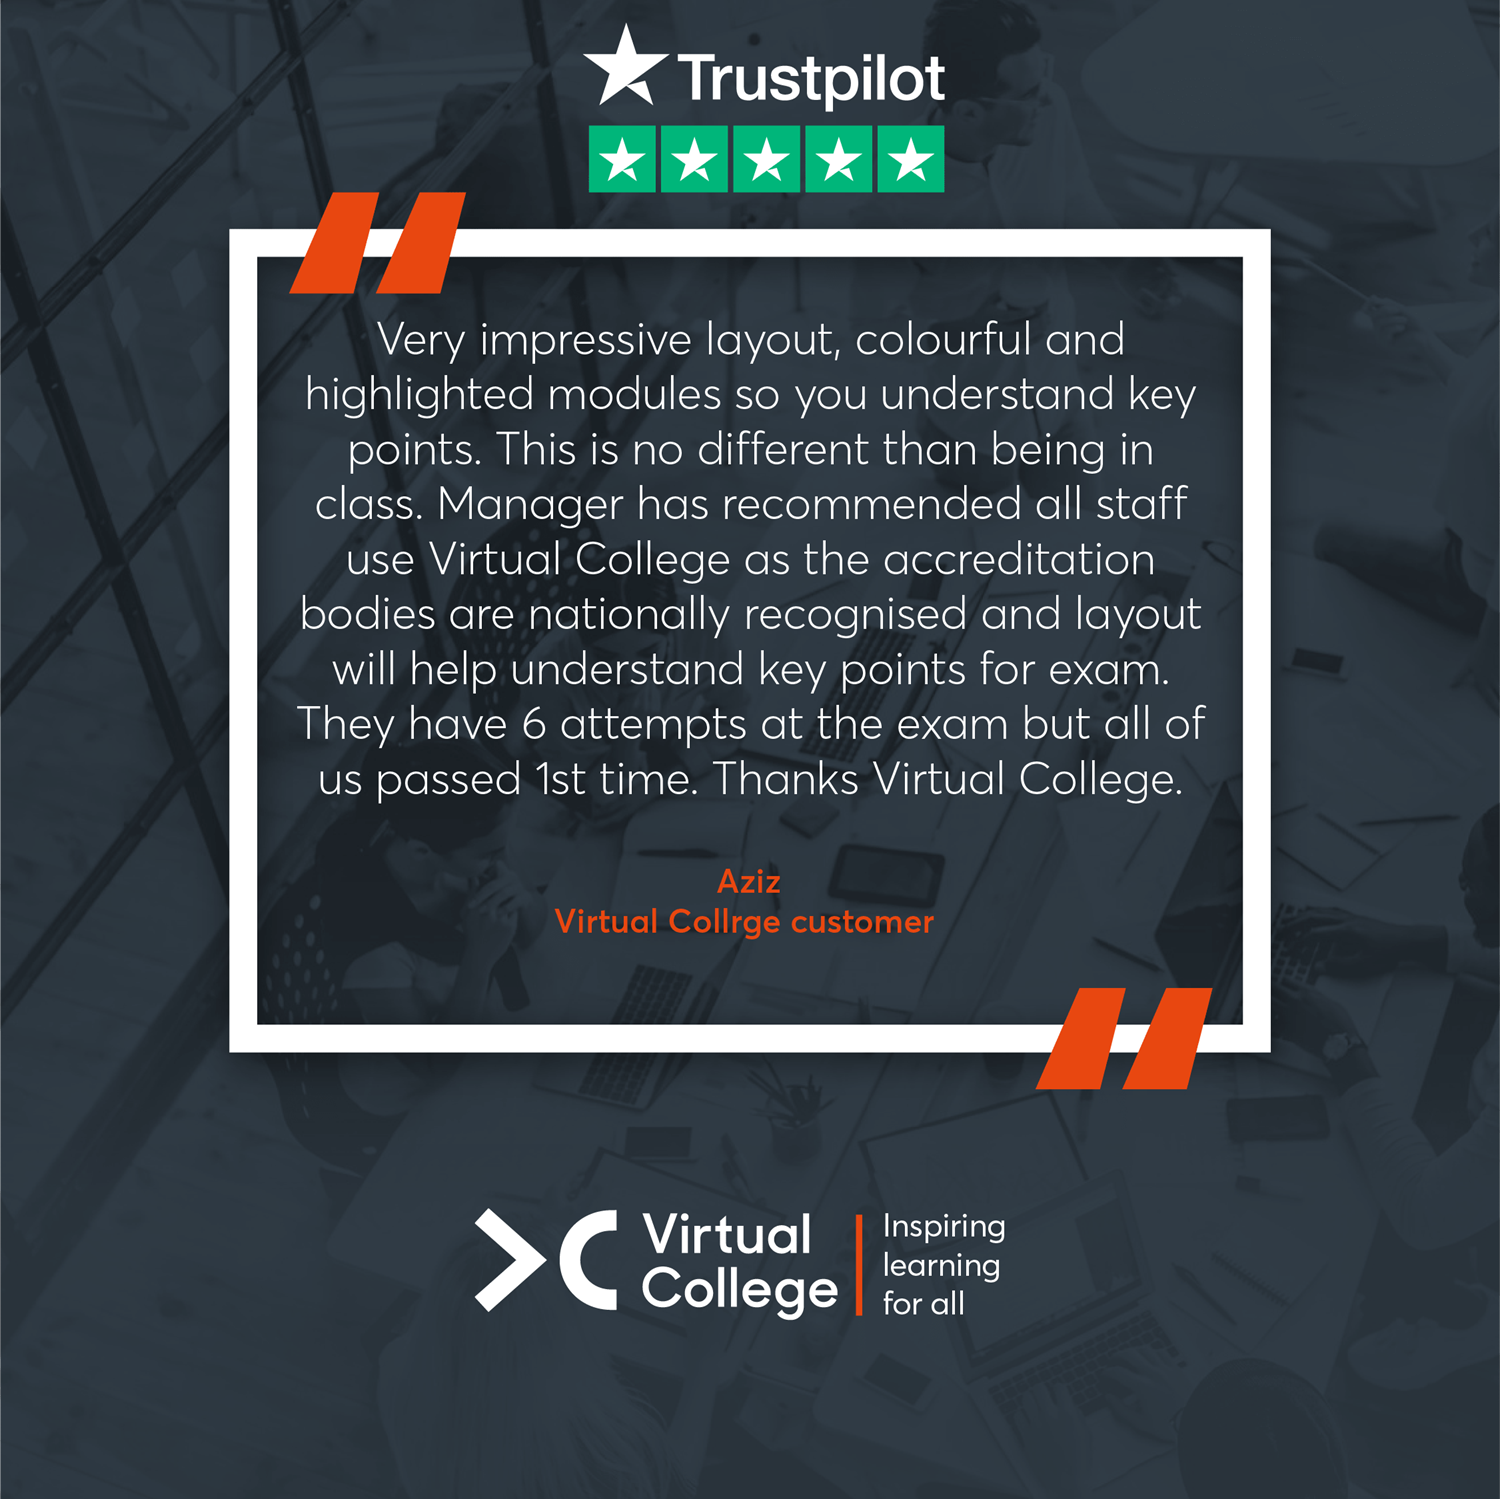 Trustpilot_virtual_college_customer_review